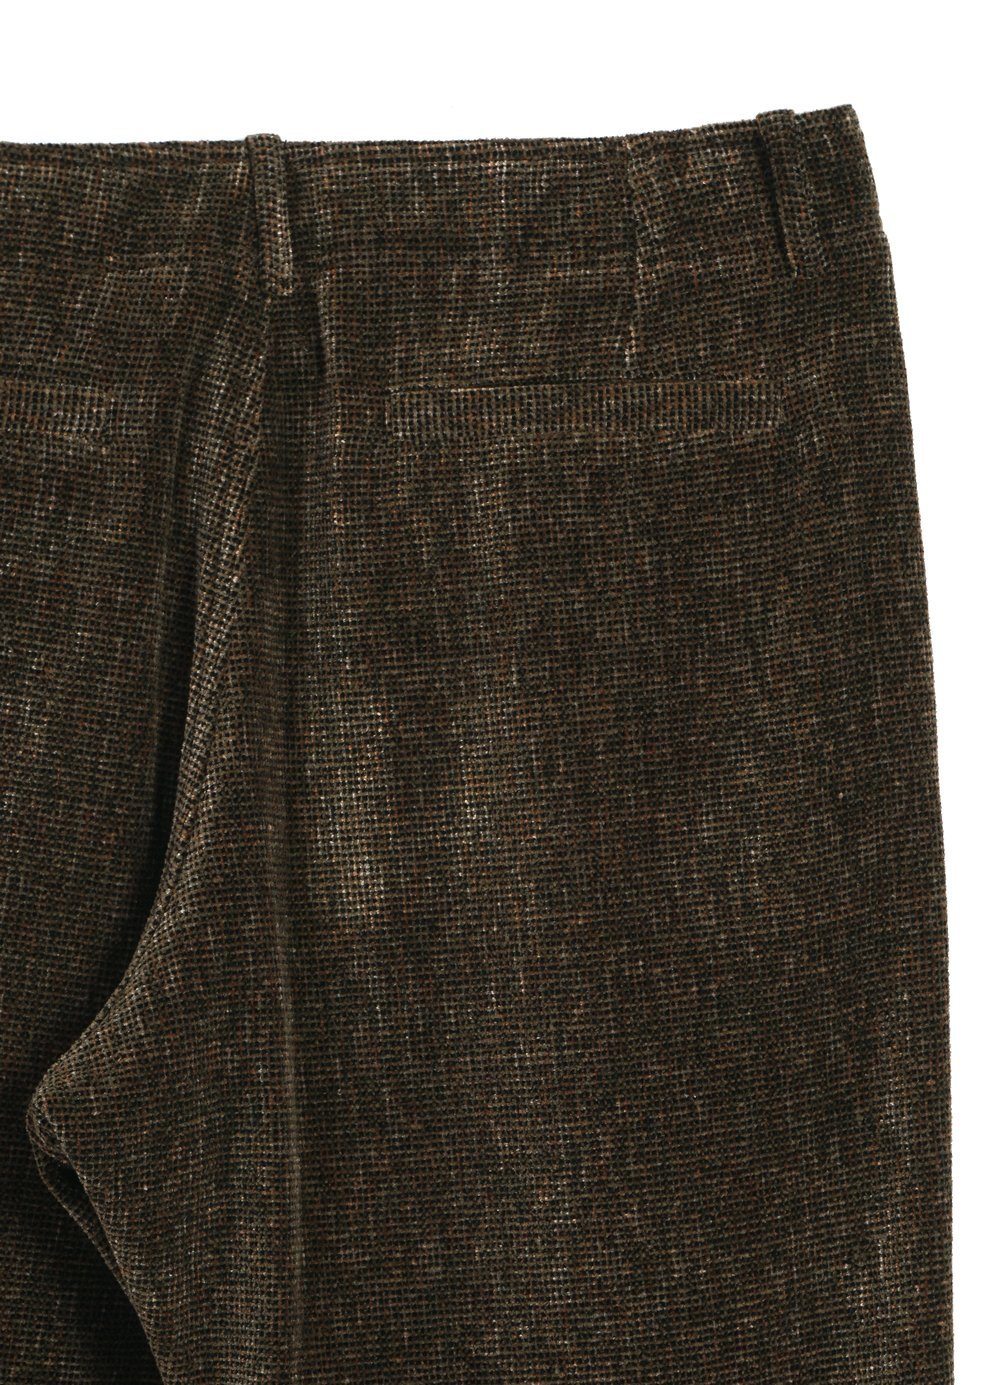 HANSEN GARMENTS - TRYGVE | Wide Cut Cropped Trousers | Amadeus - HANSEN Garments